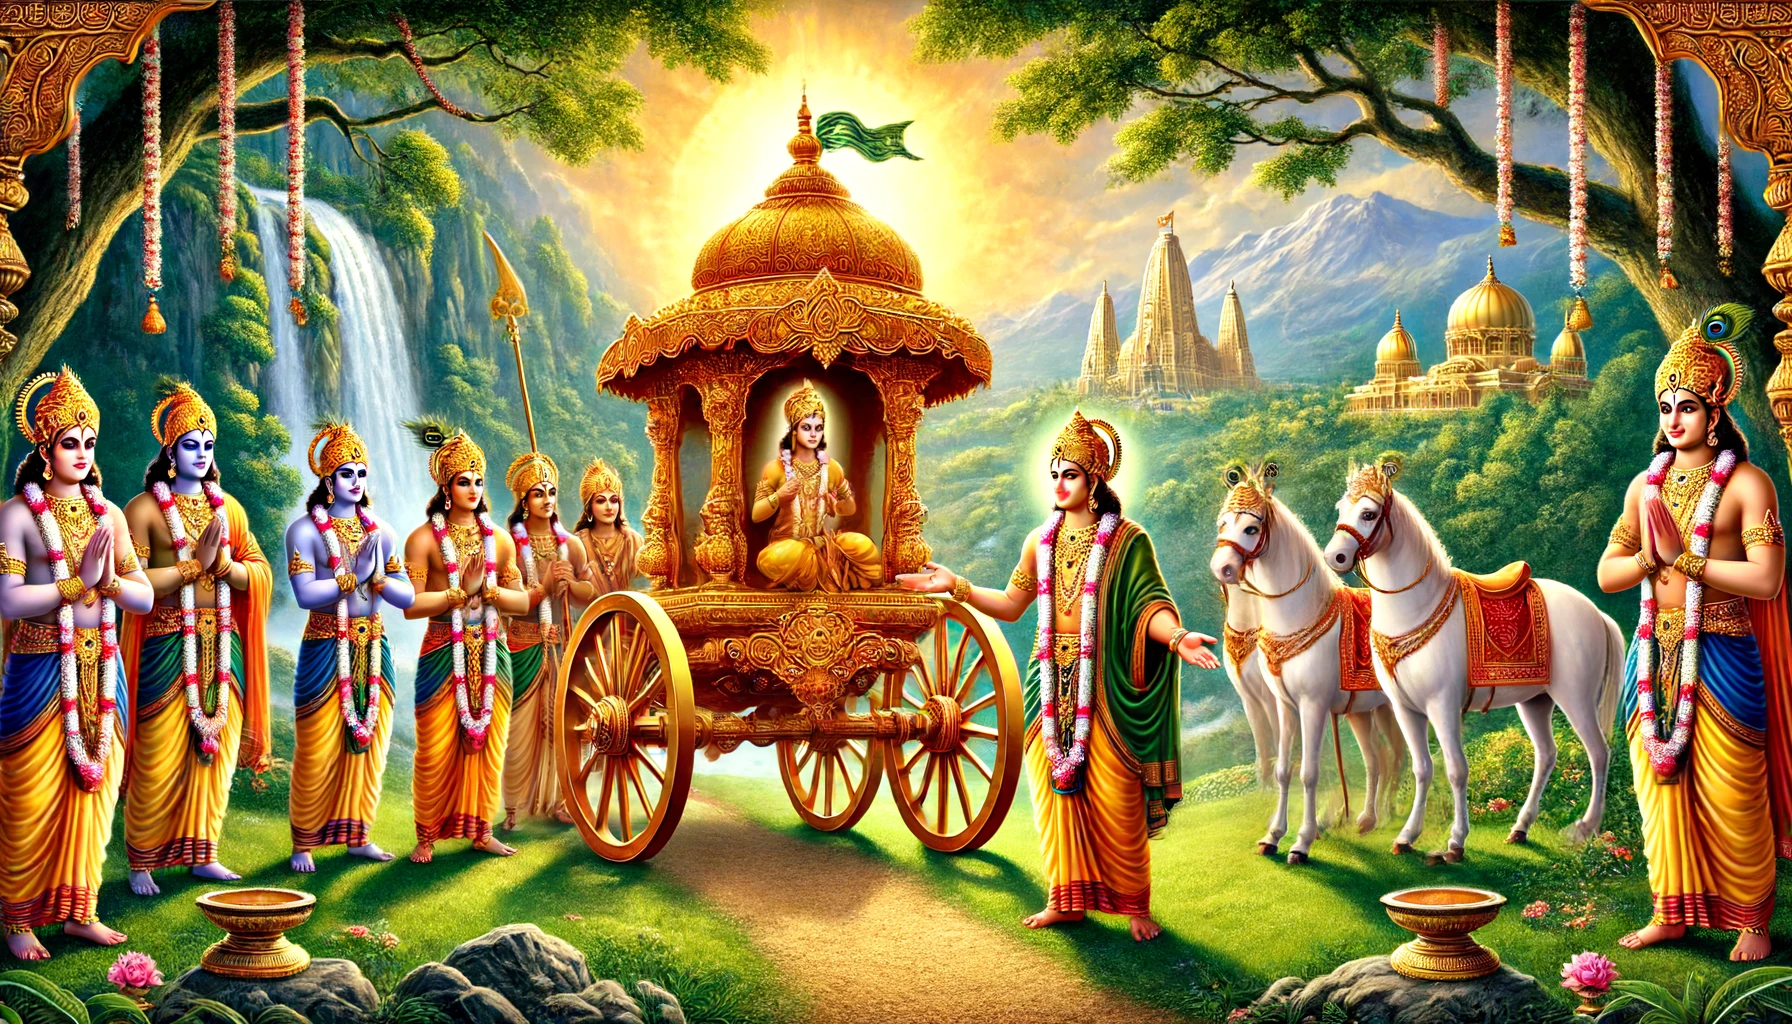 Kaliyugada Kalpataru Sri Baahika Rajaru Presentation of the Golden Chariot